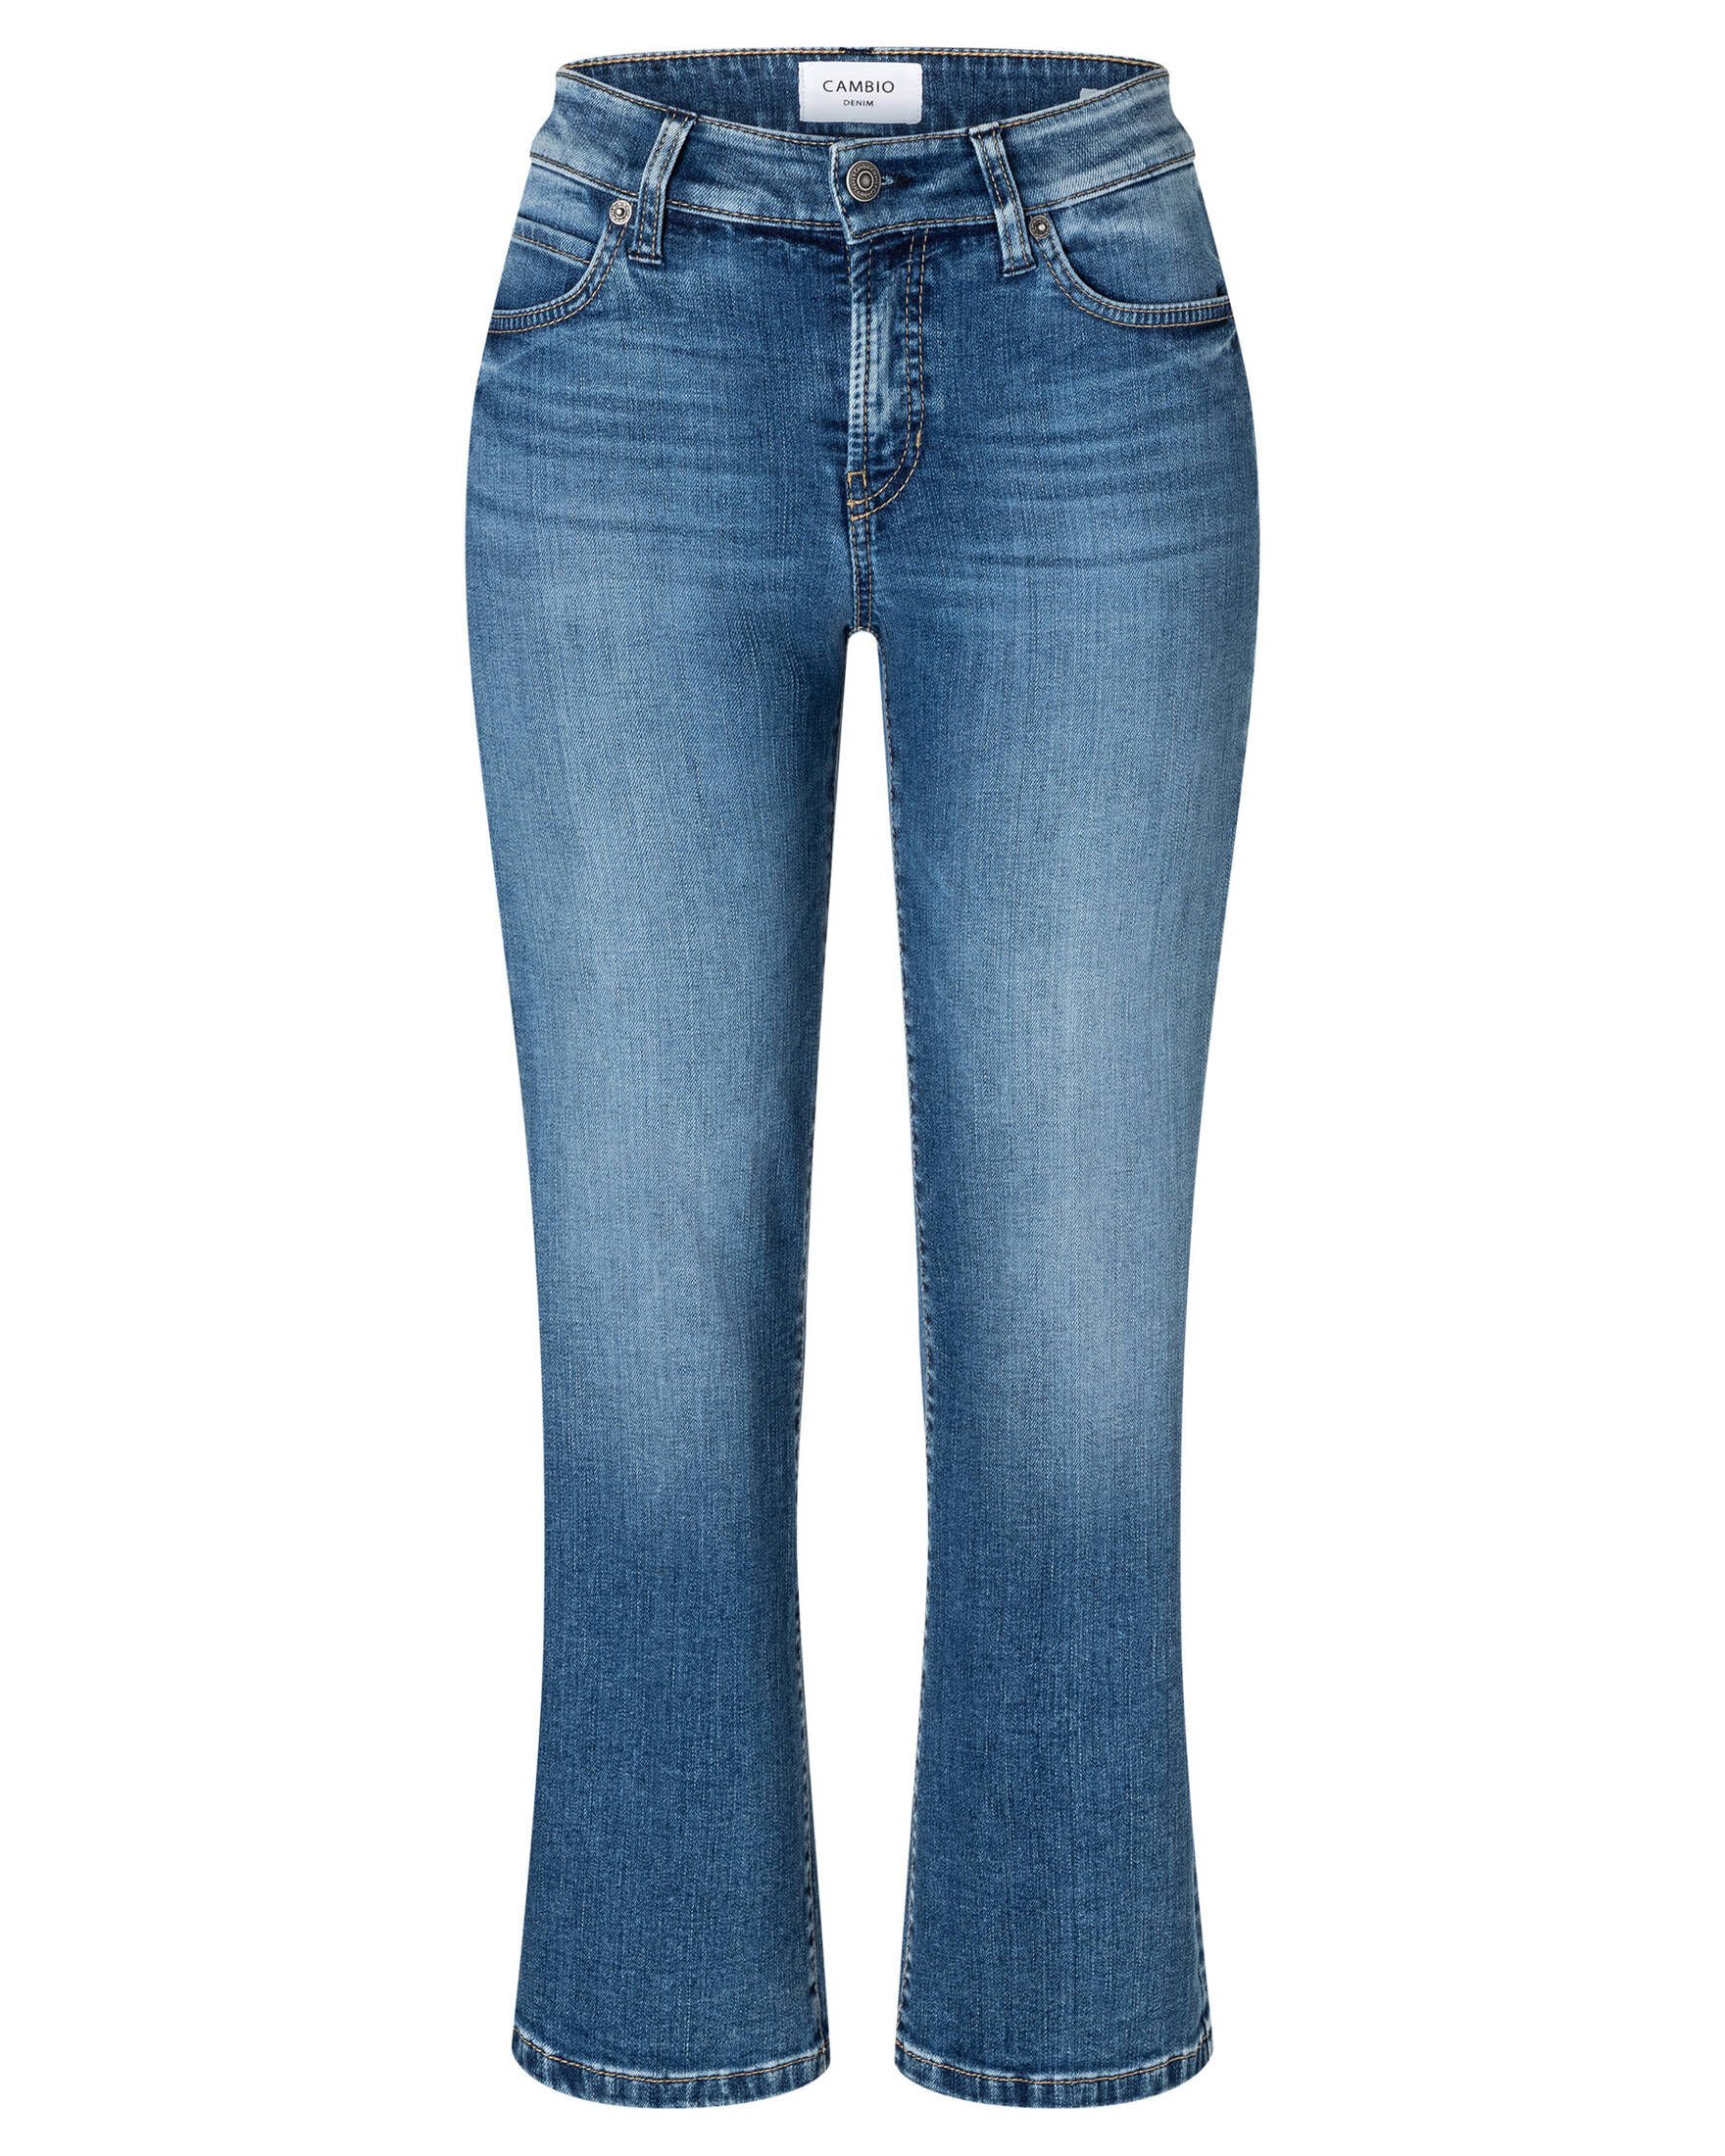 Cambio| Damen Bootcut Jeans PARIS EASY KICK